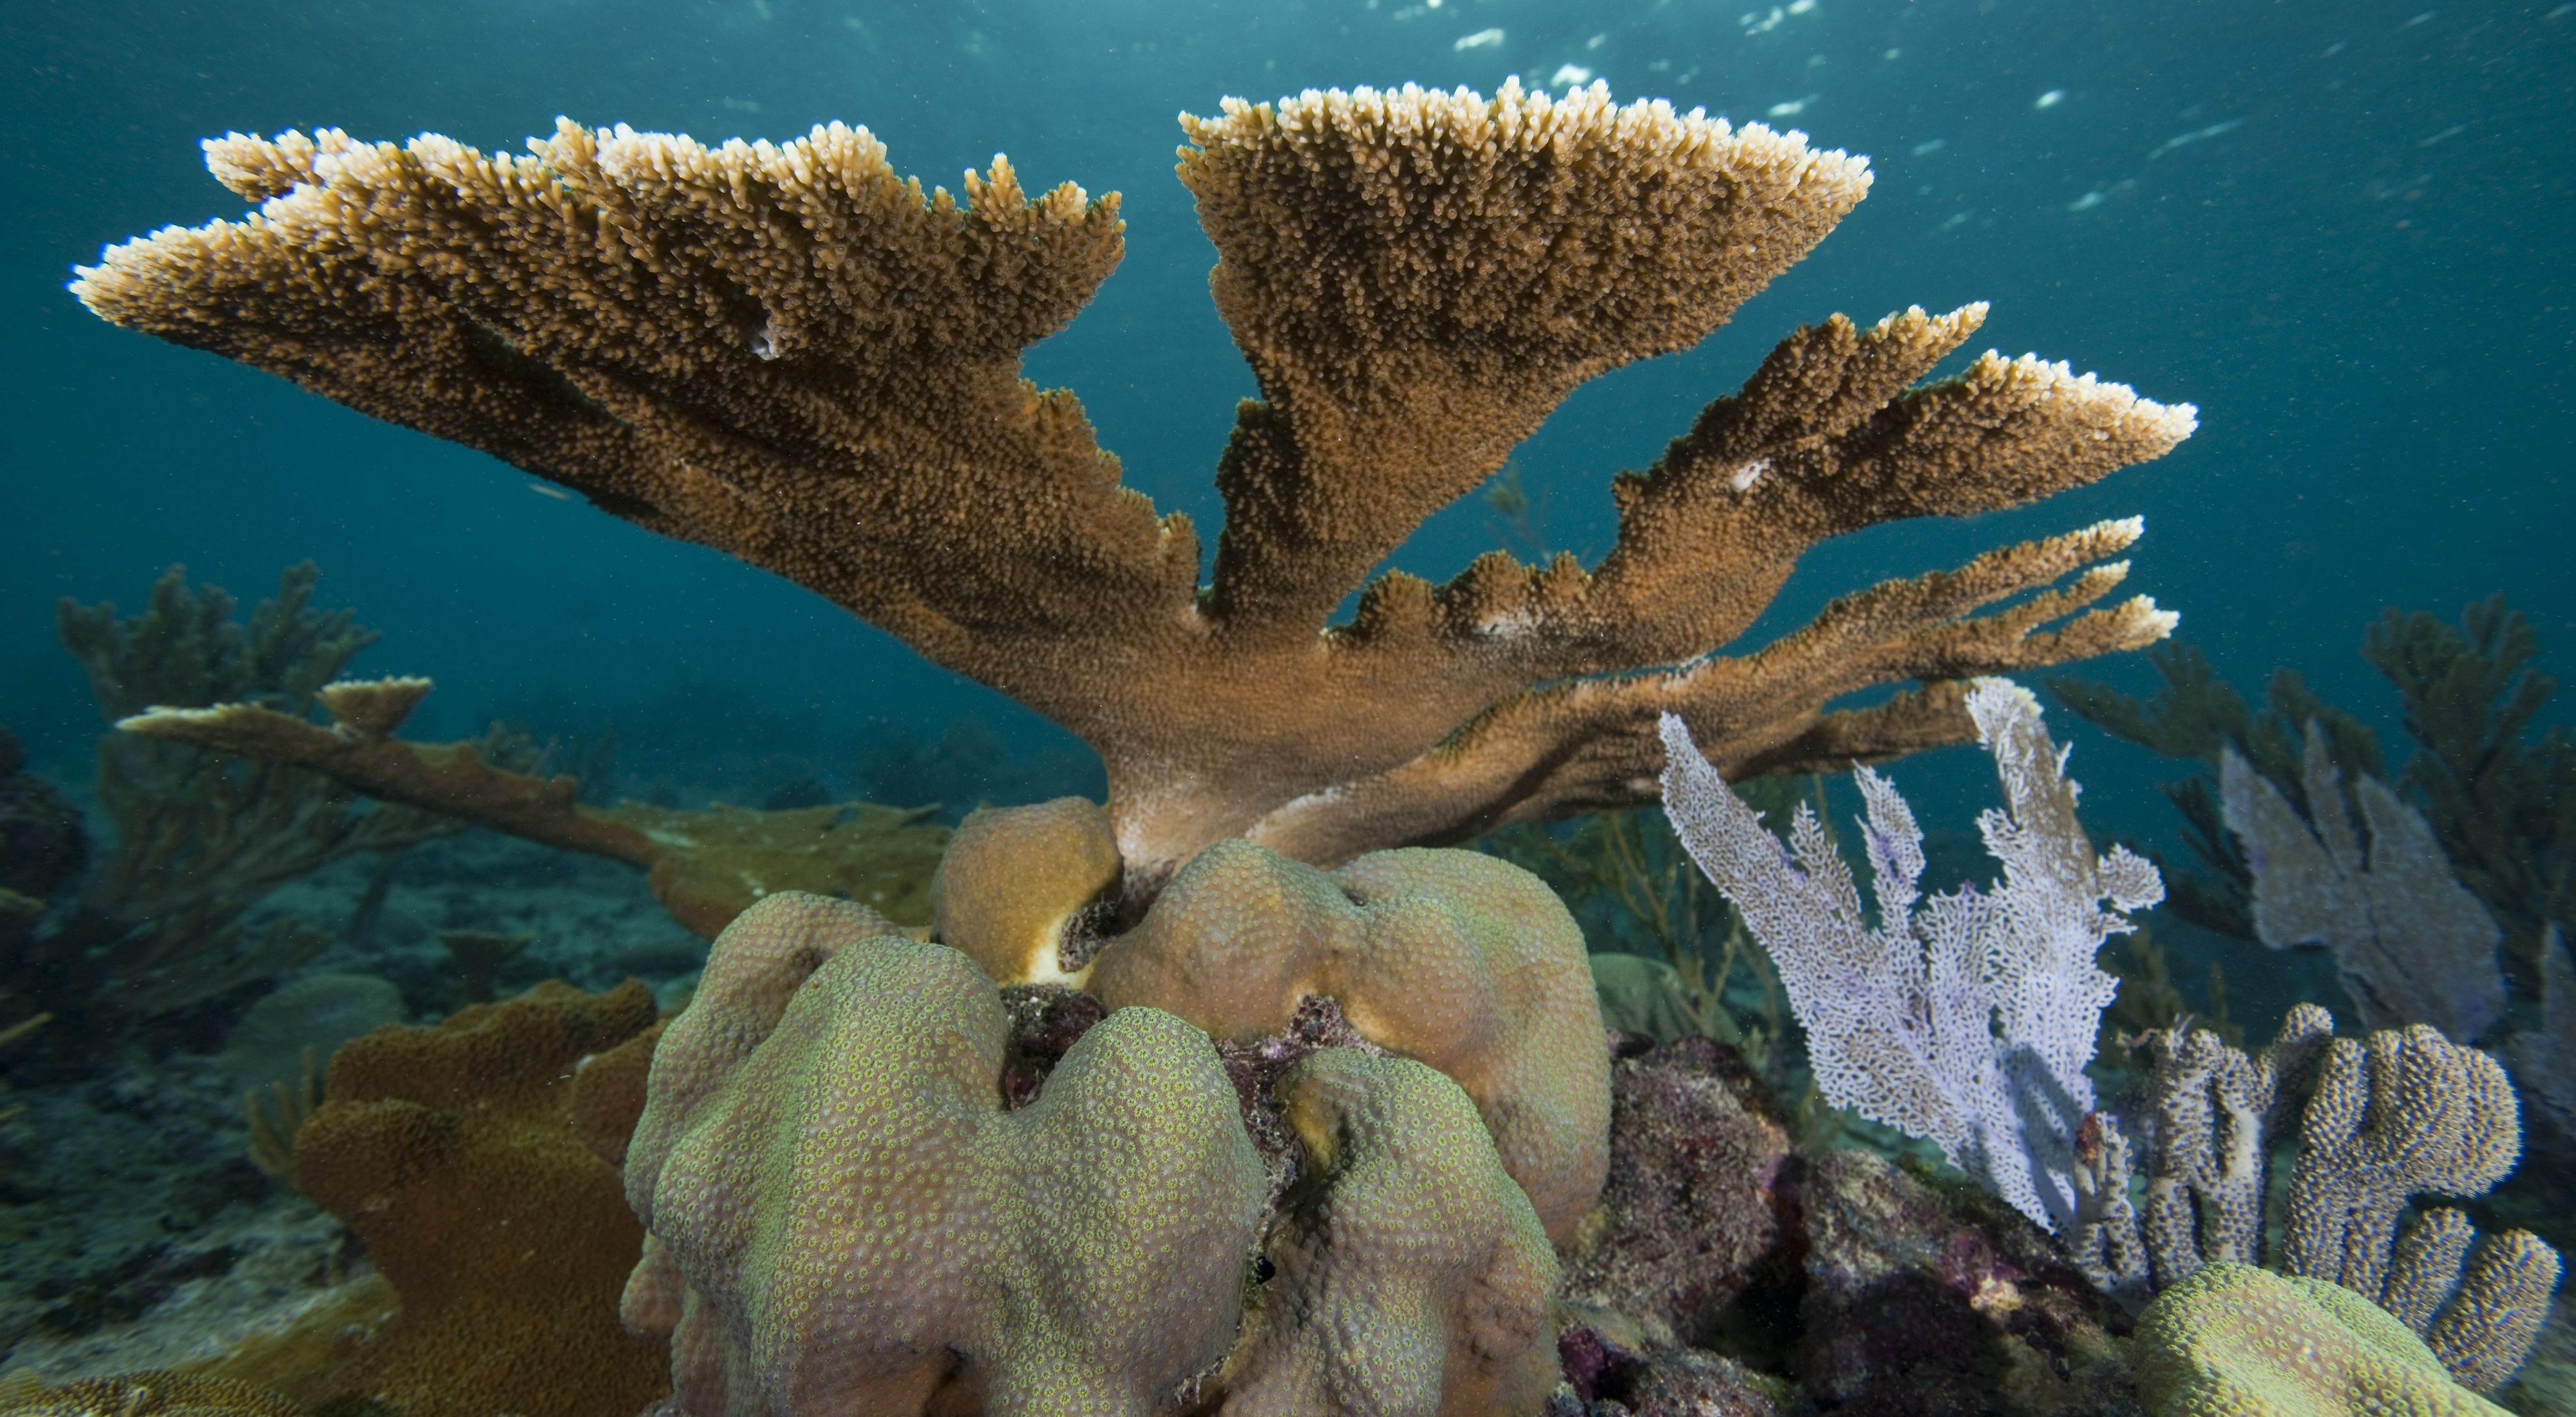 Elkhorn and boulder coral in the ocean.